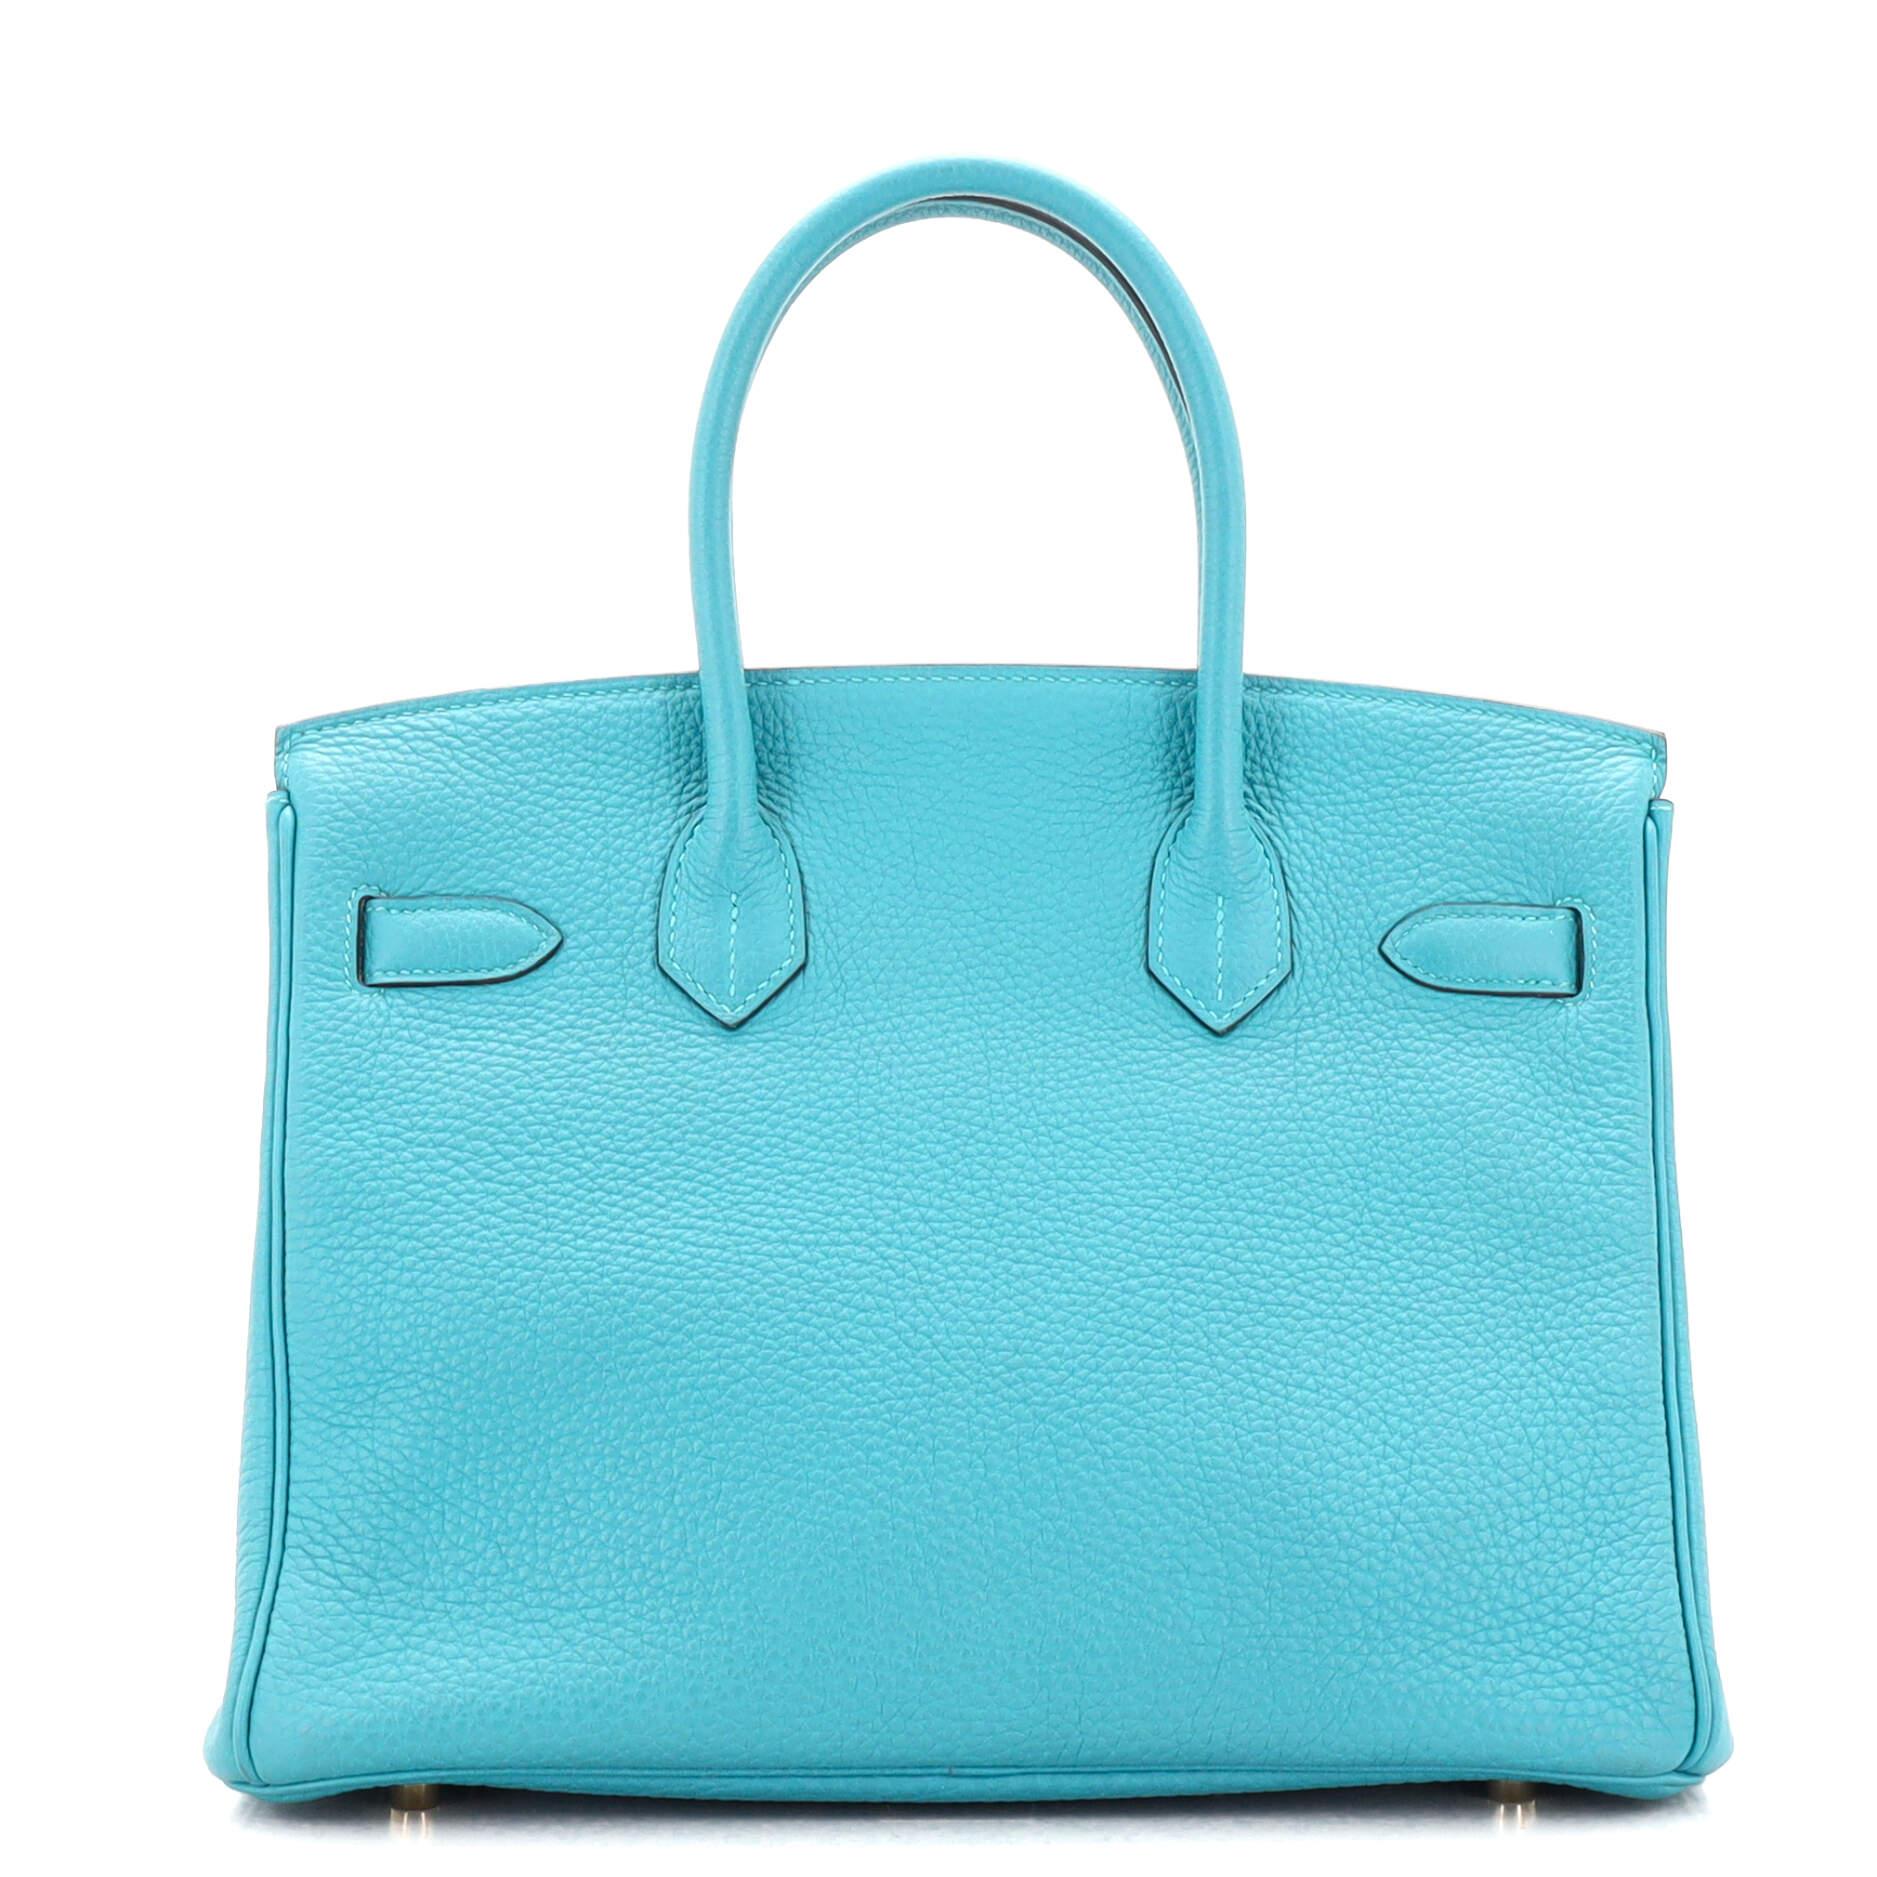 Blue Hermes Birkin Handbag Turquoise Togo with Gold Hardware 30